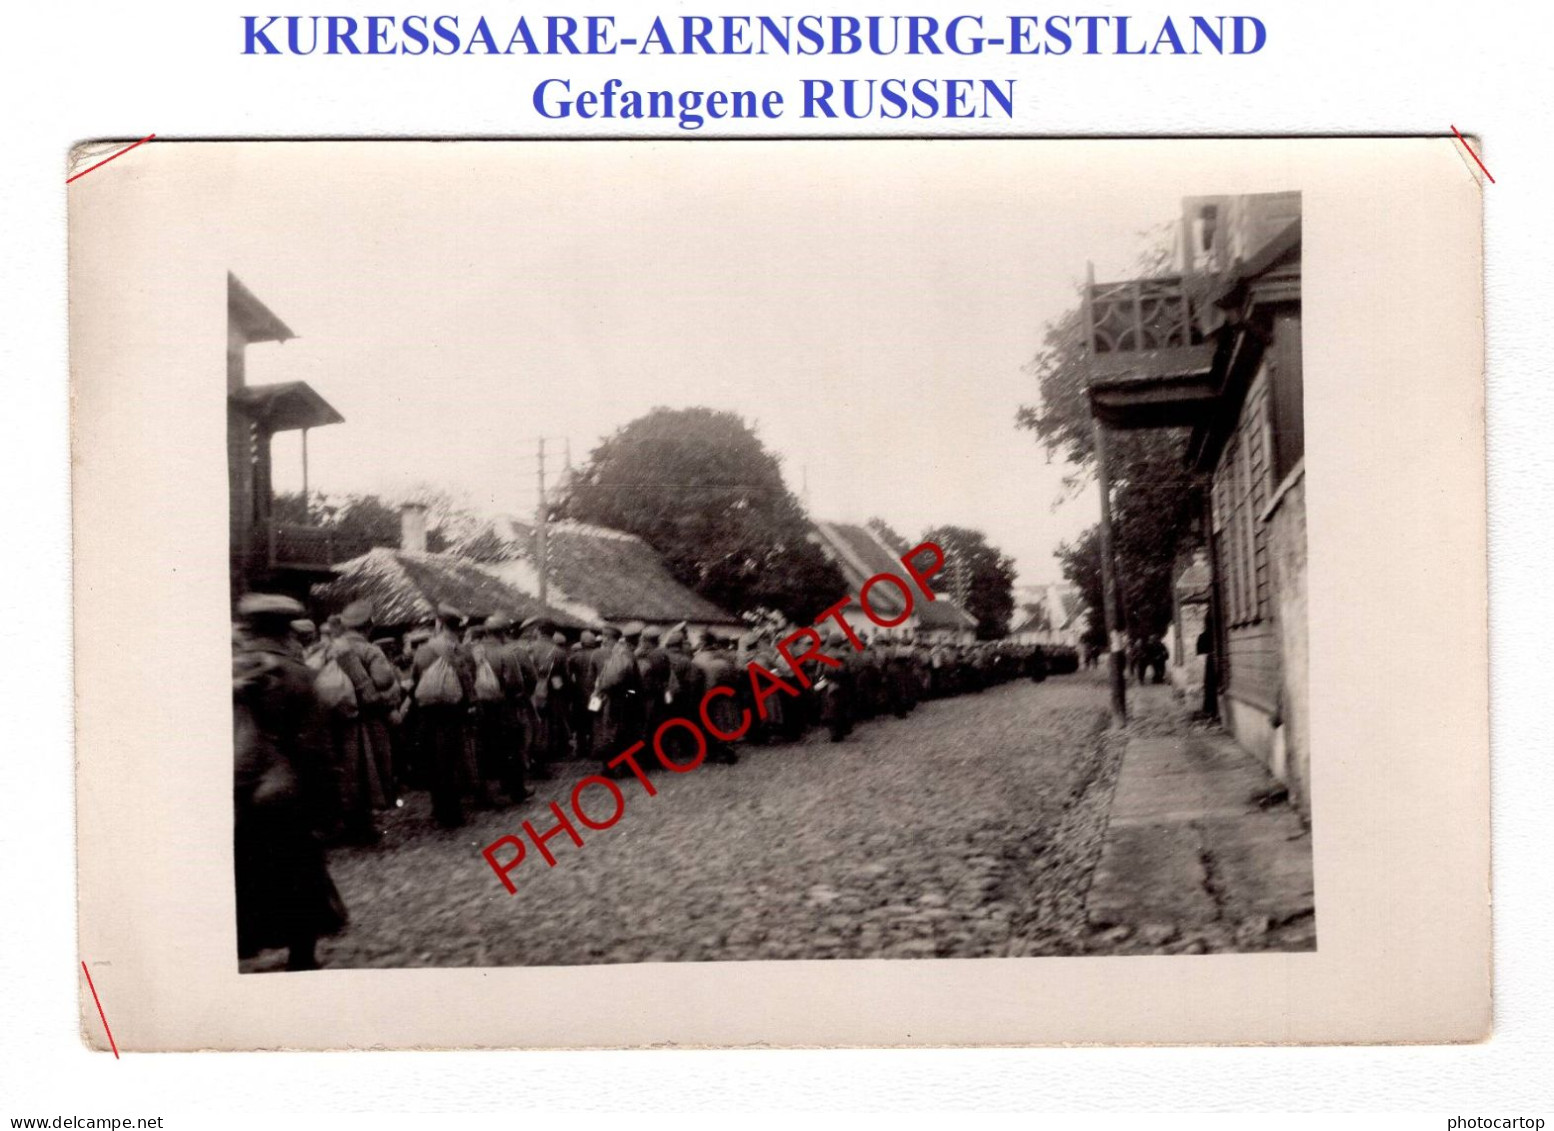 KURESSAARE-ARENSBURG-Prisonniers-Gefangene RUSSEN-CARTE PHOTO Allemande-GUERRE-14-18-1 WK-Militaria-ÖSEL-ESTLAND- - Estonia